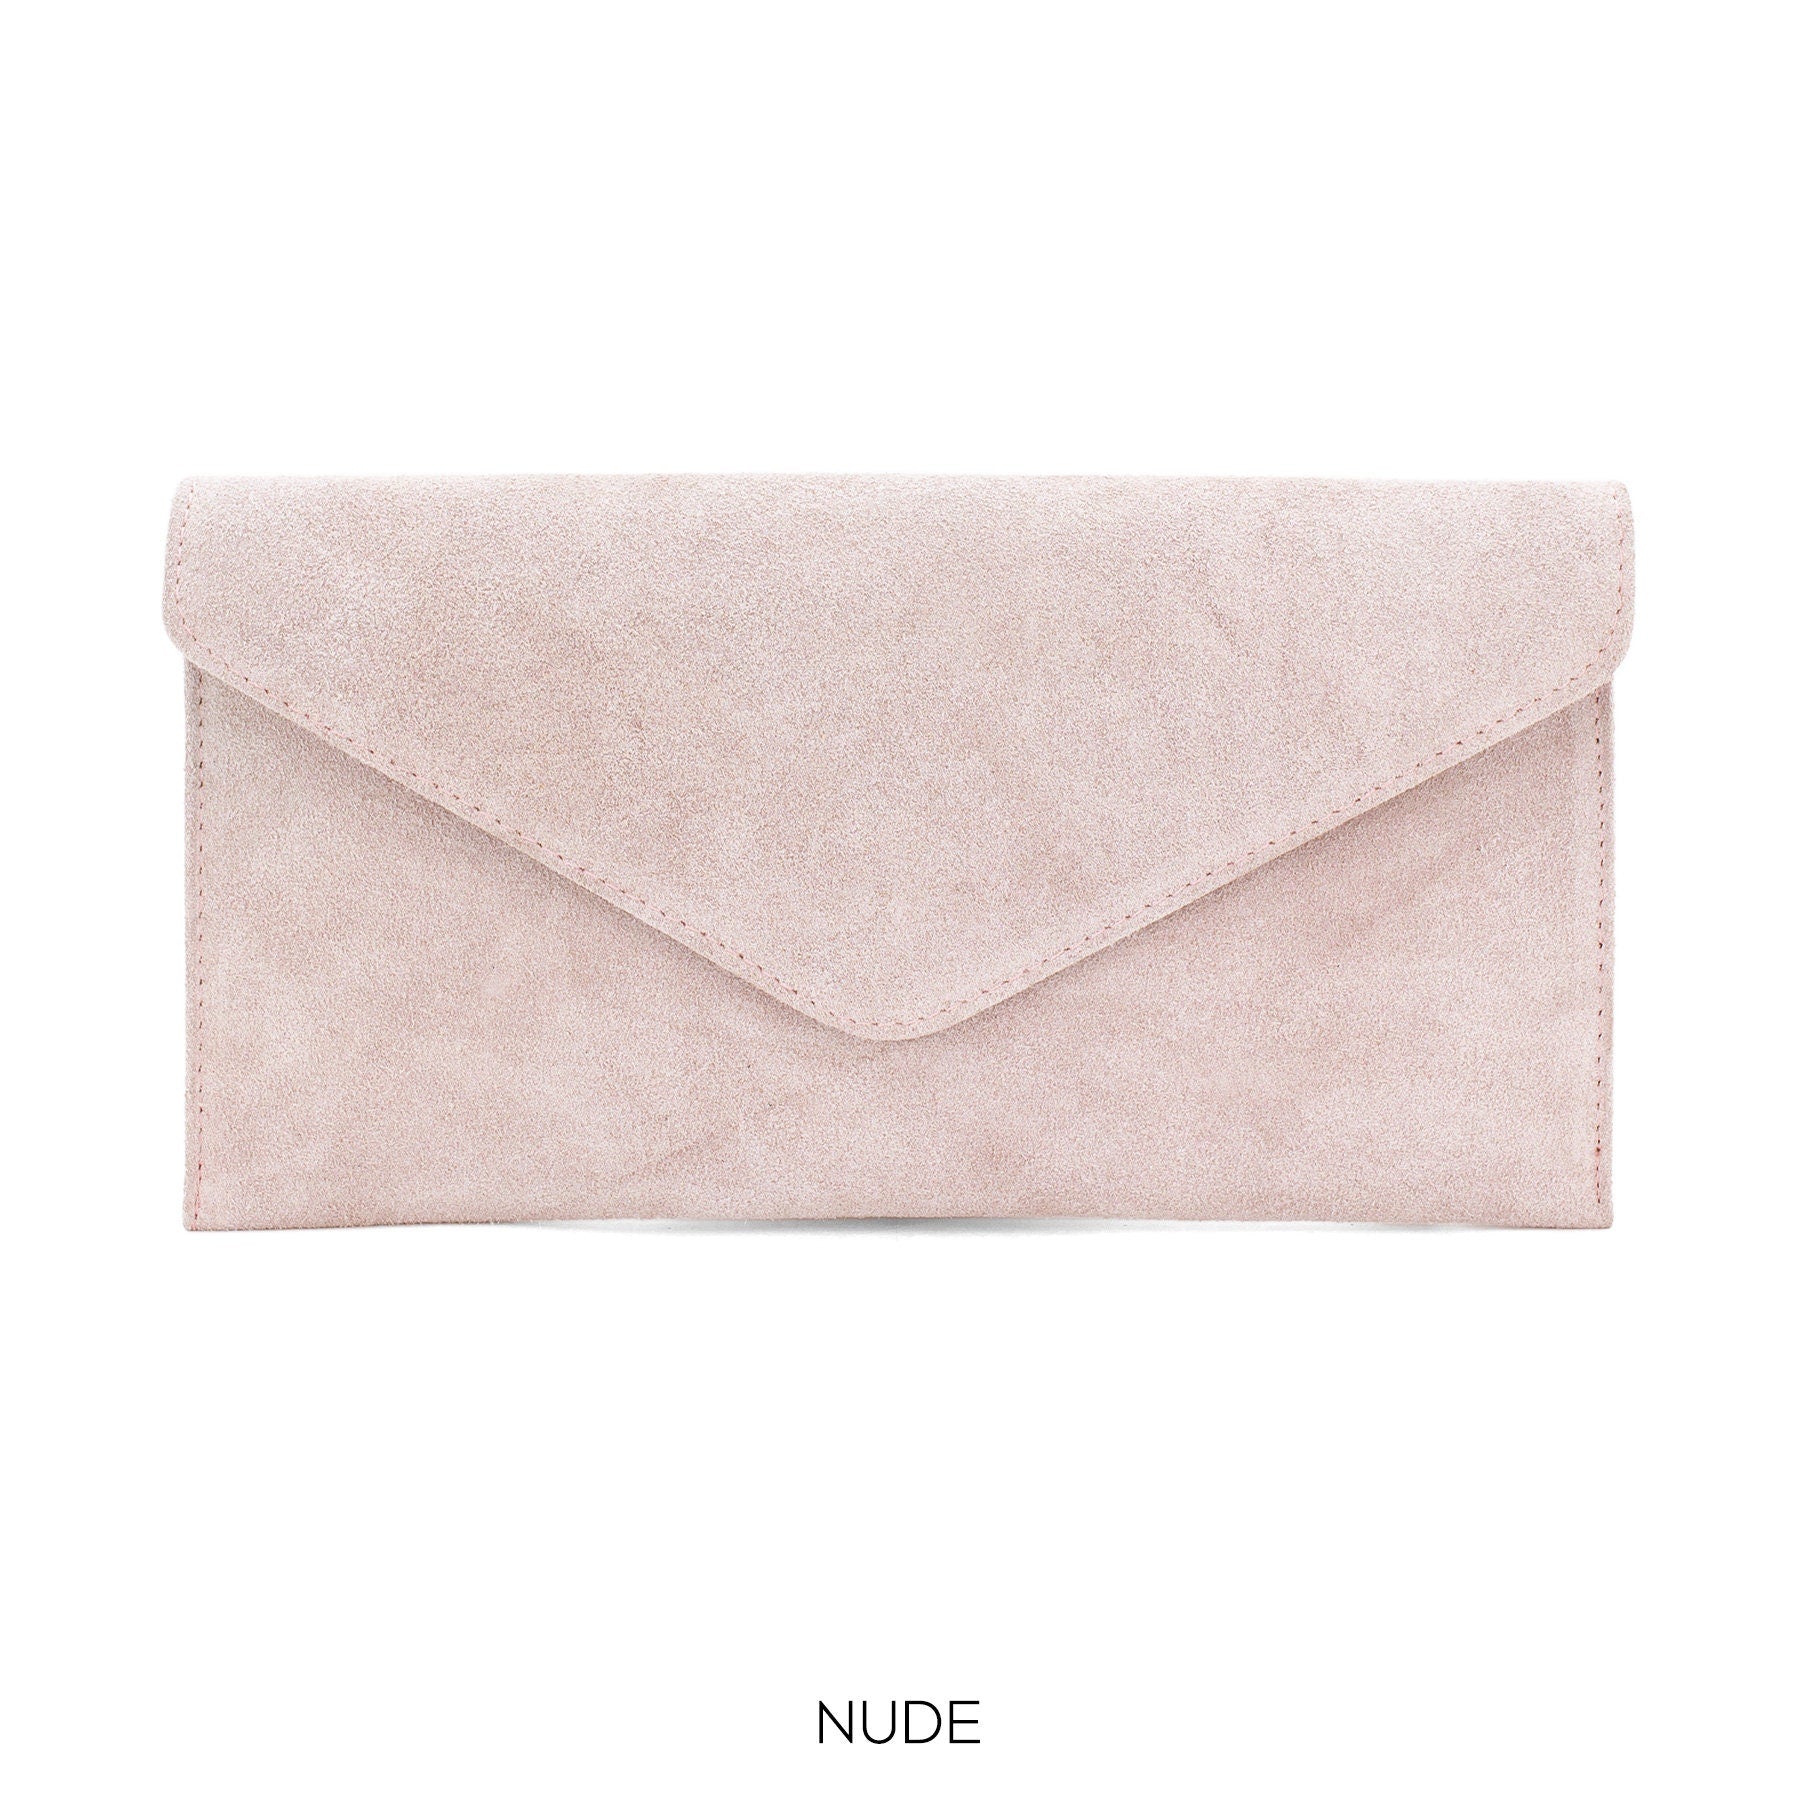  Nude envelope clutch bag